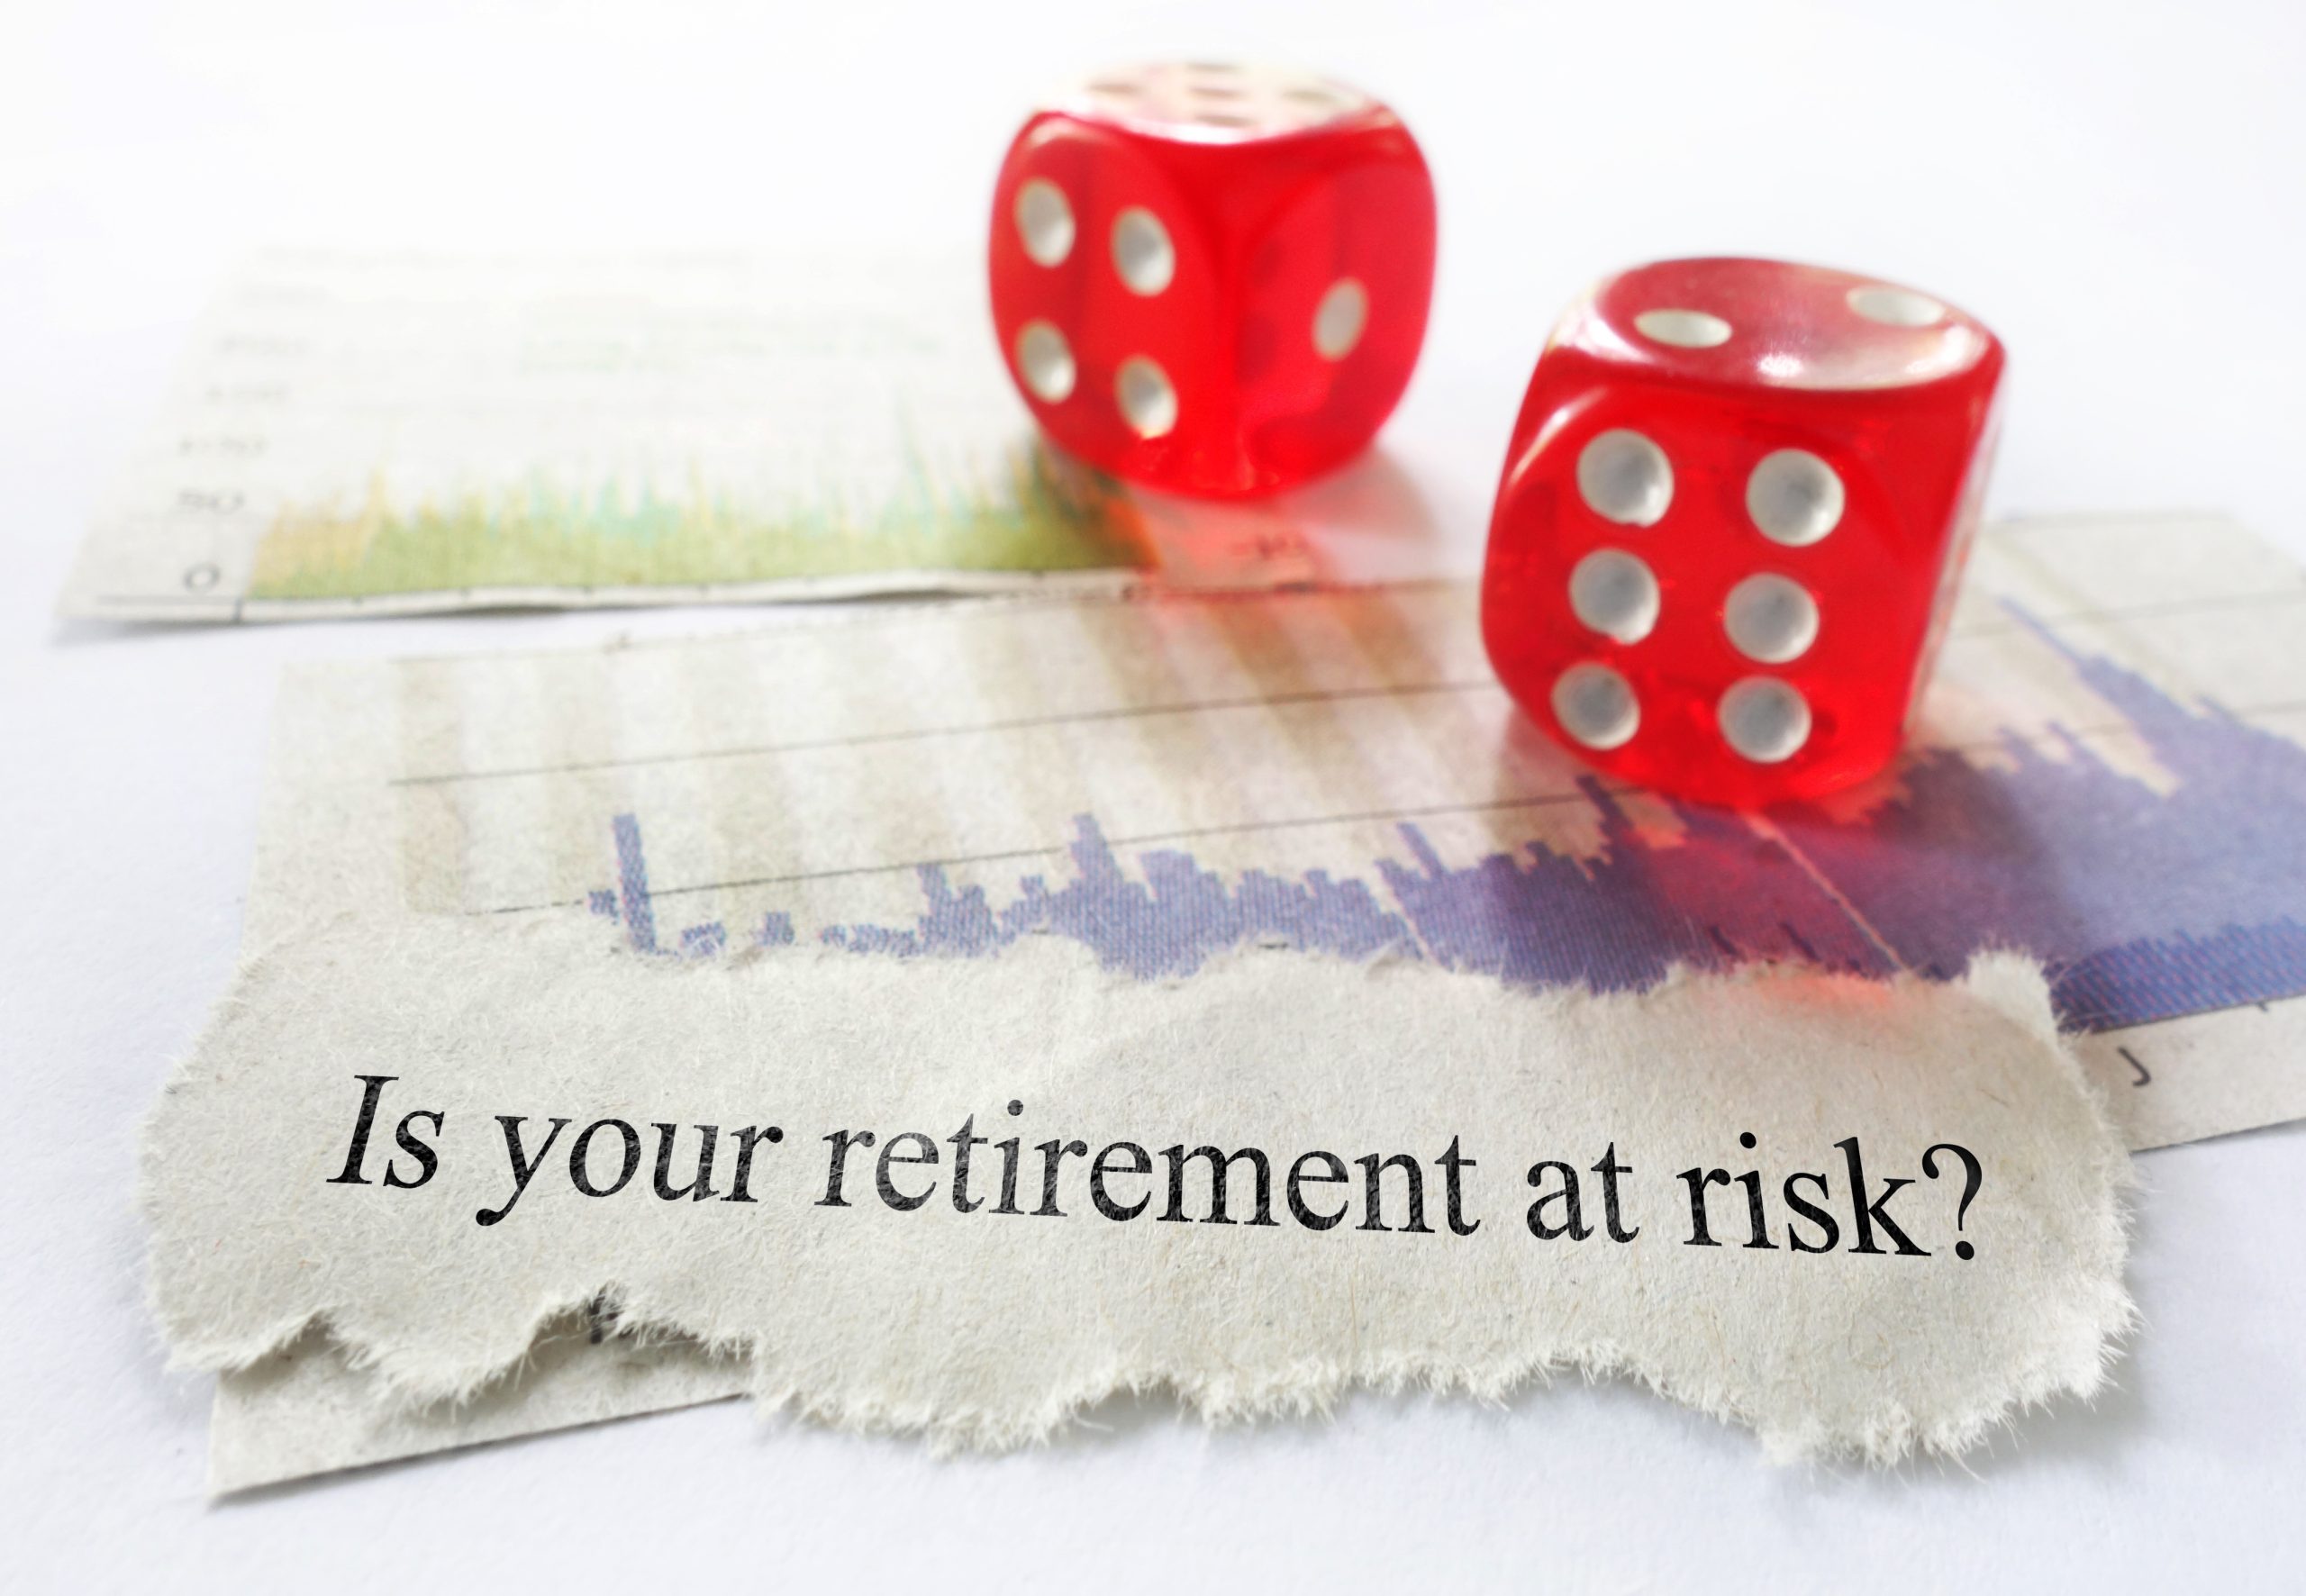 Retirement risks